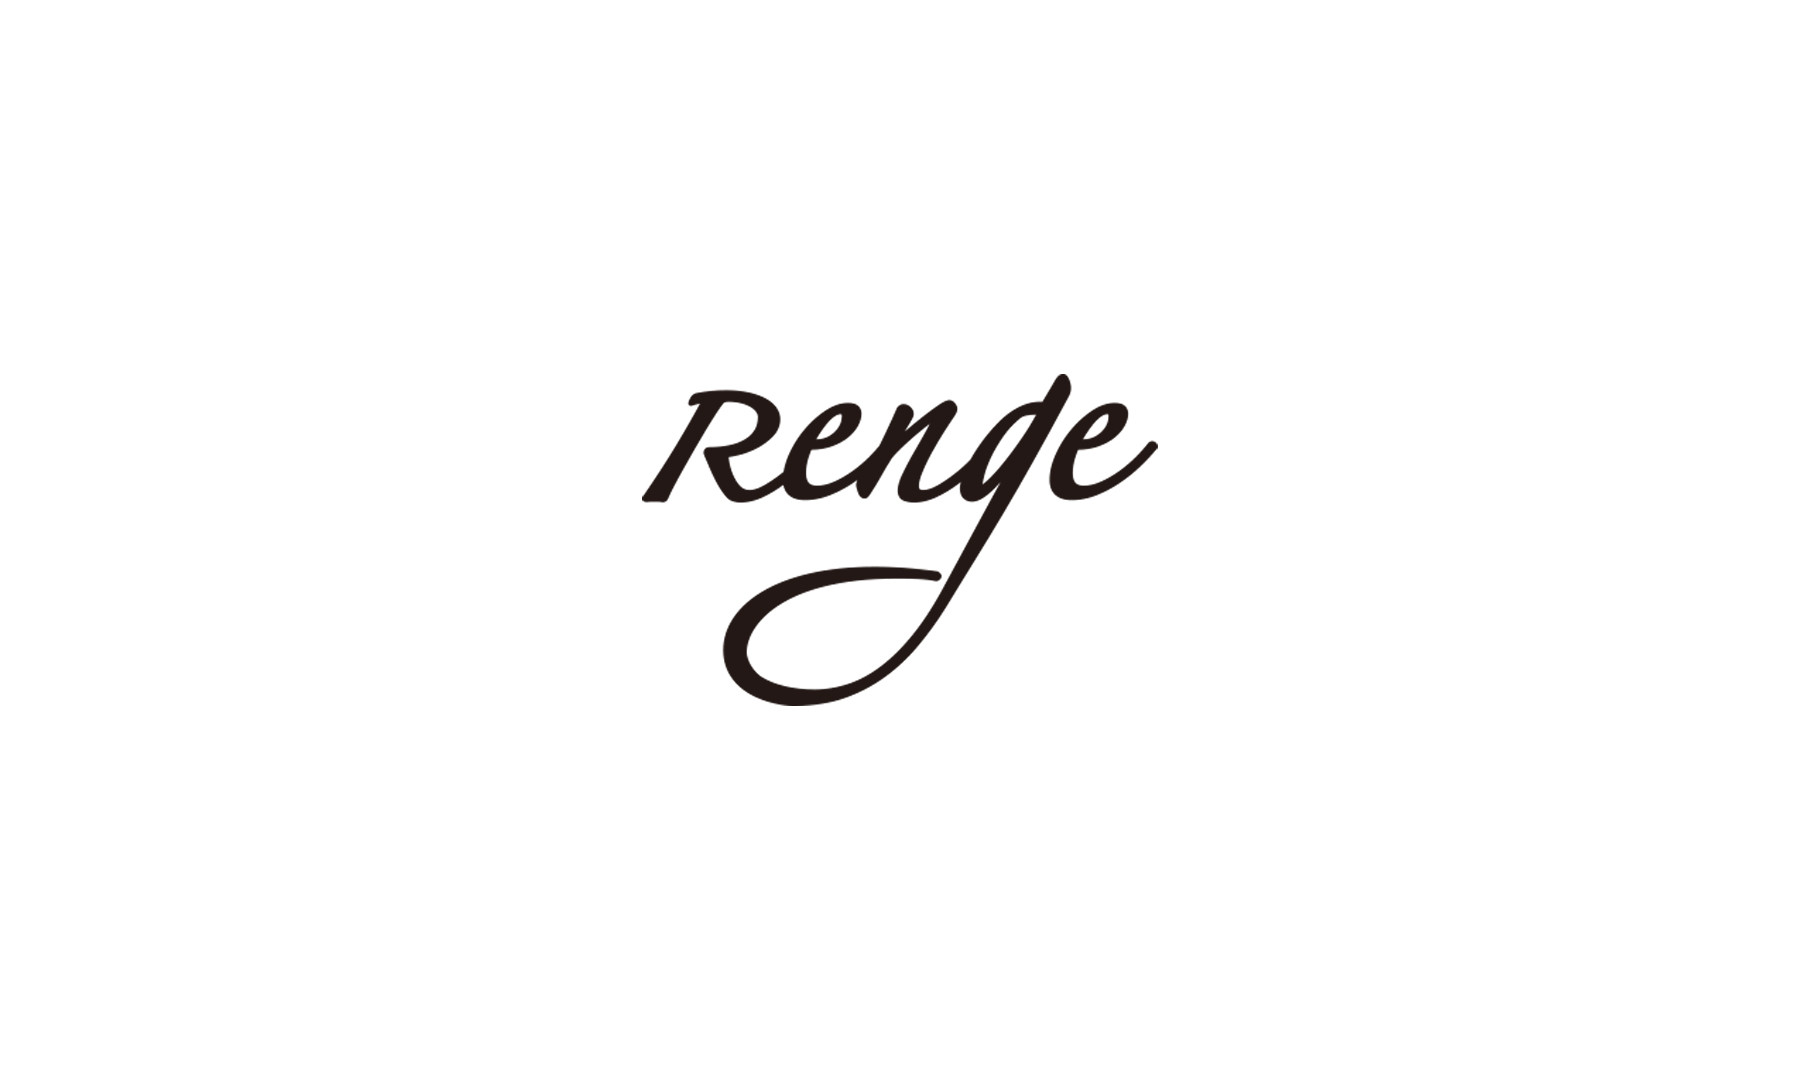 Renge's images7